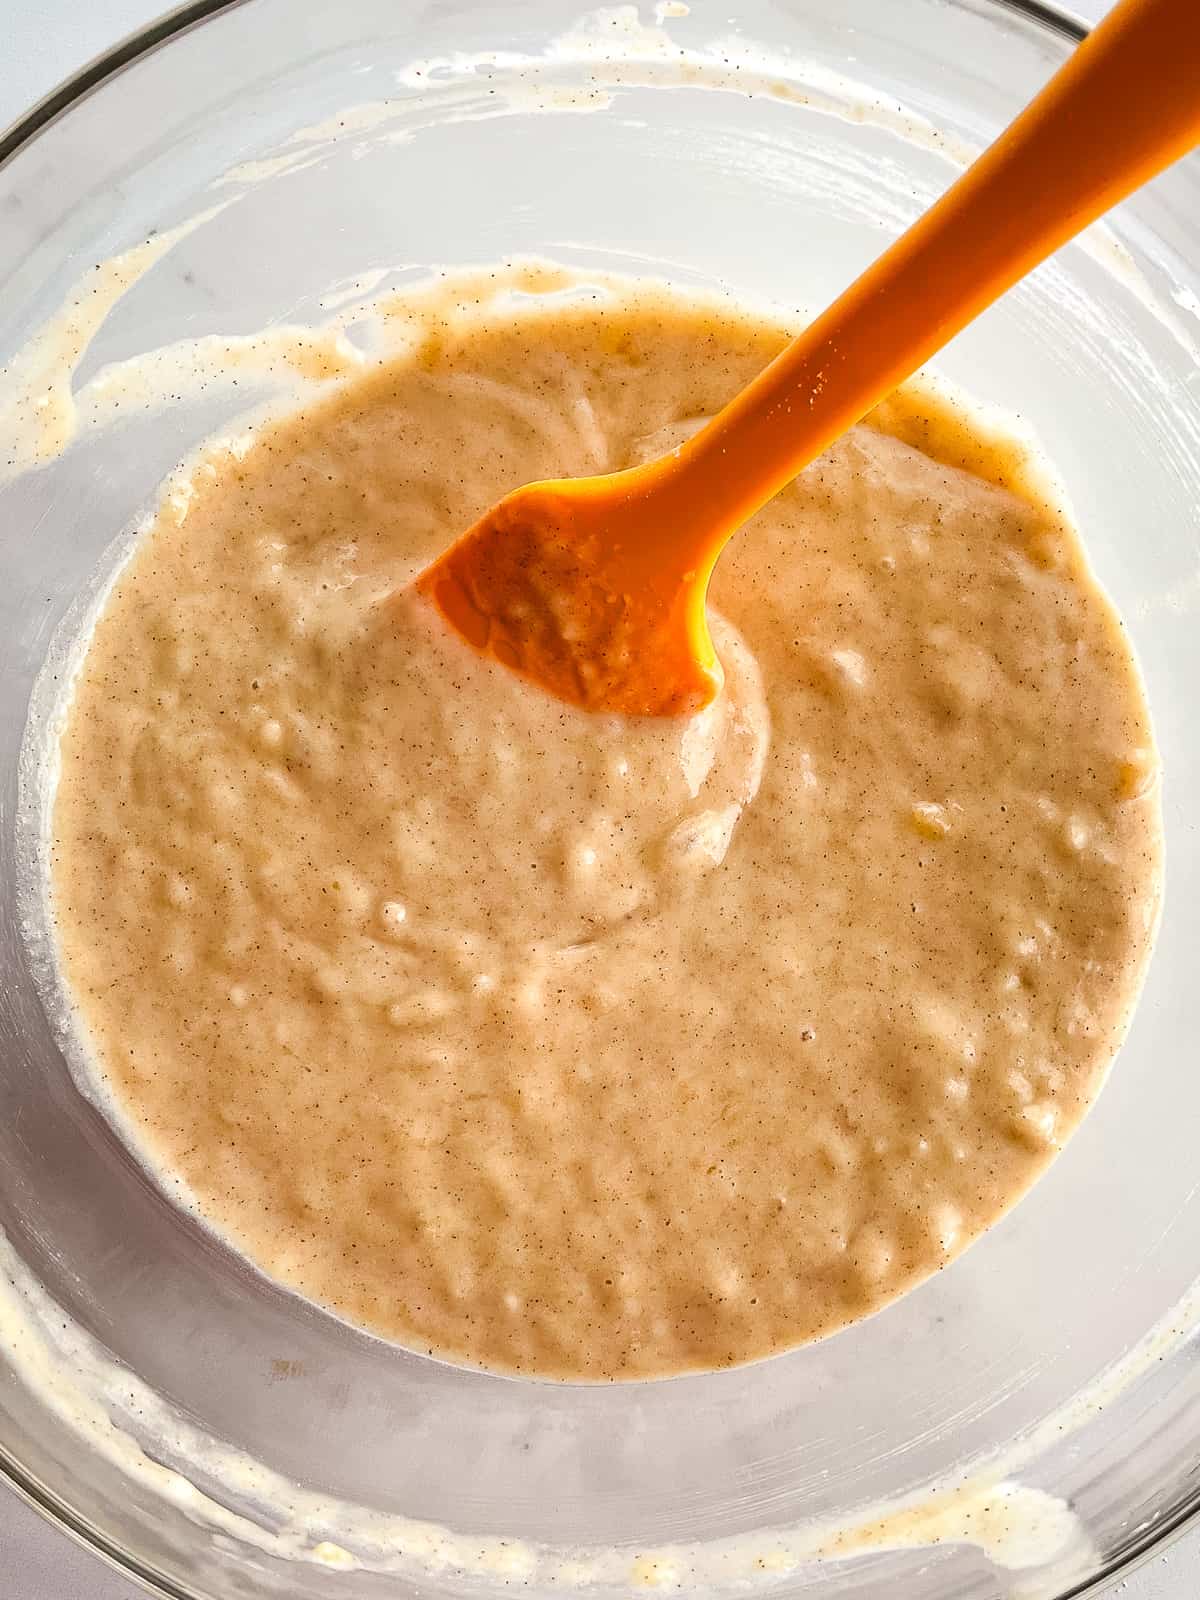 Gluten-free banana pancake batter in a bowl with an orange spatula.